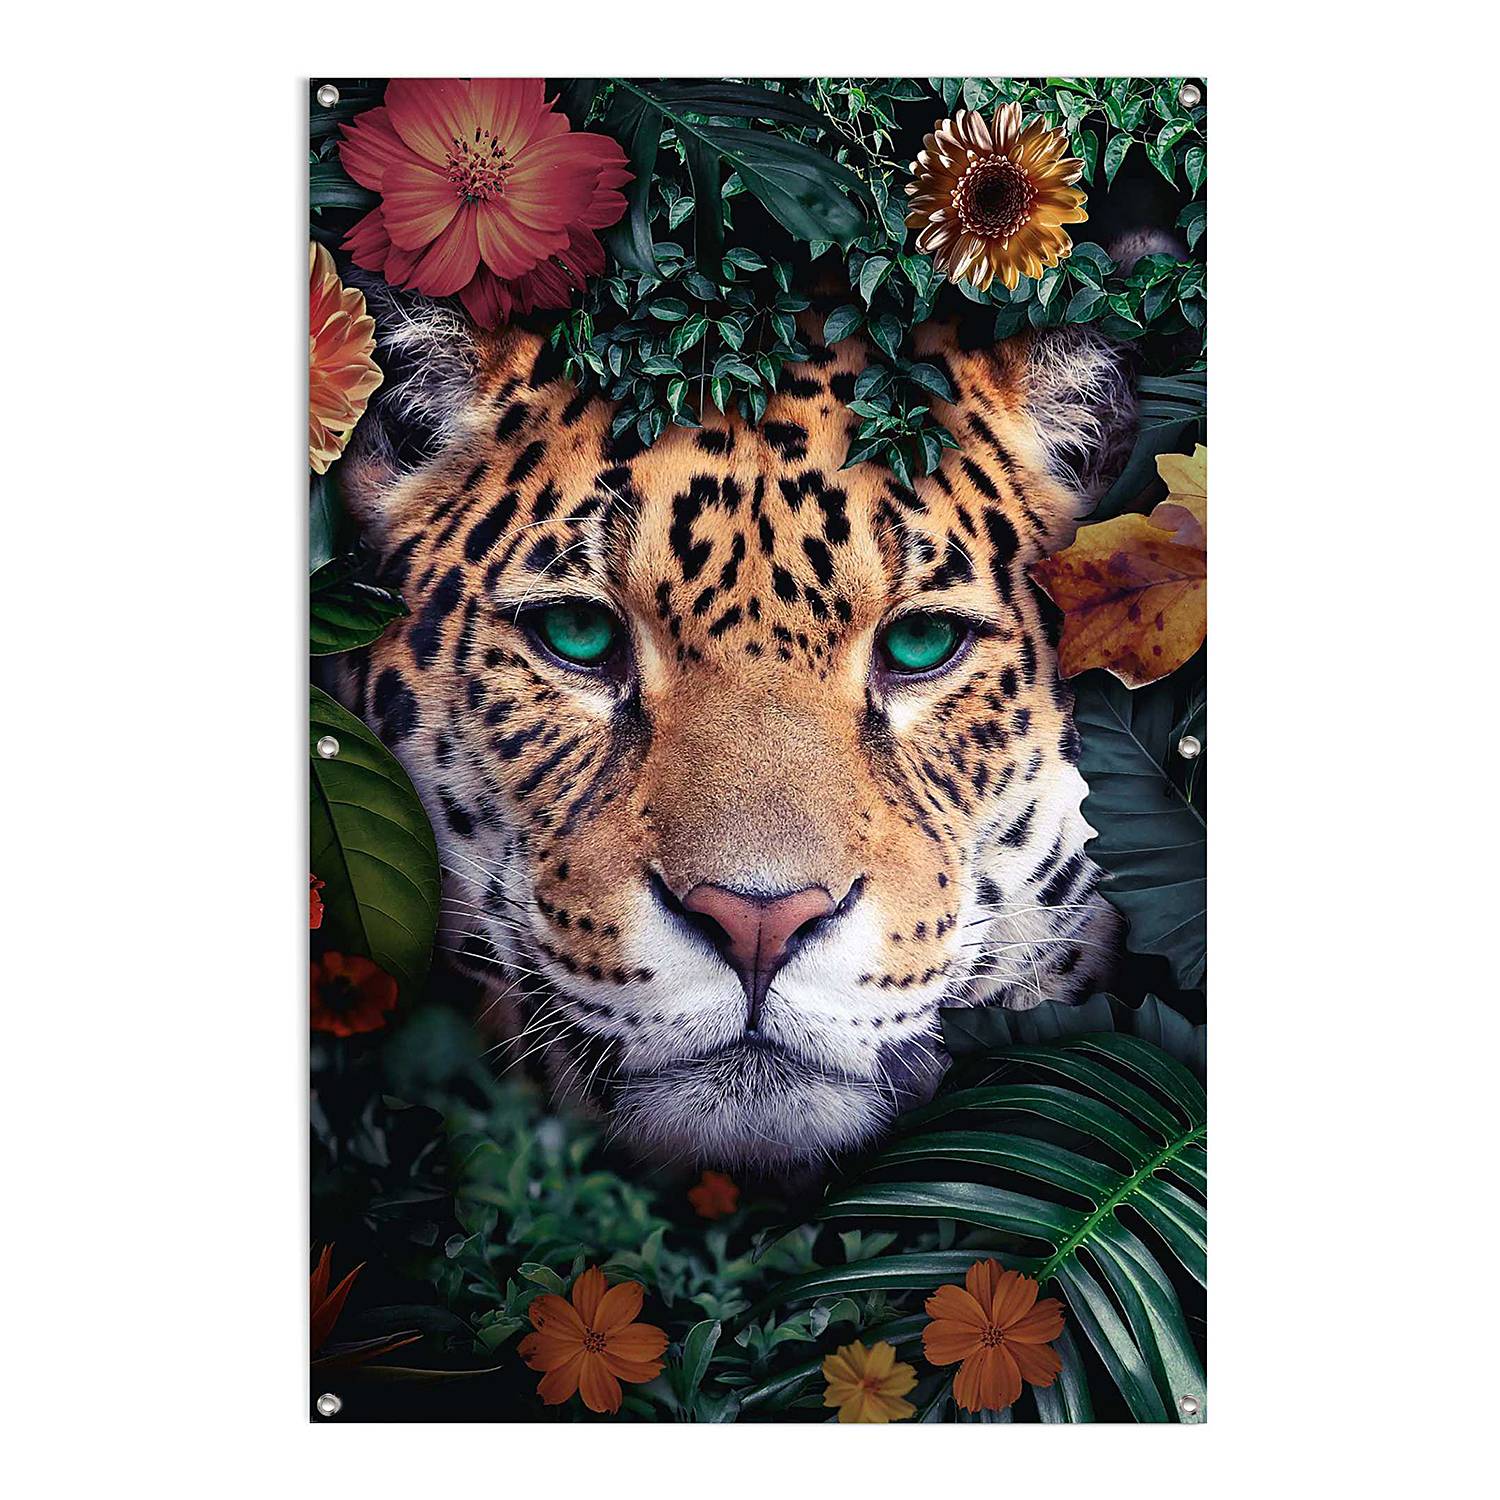 Outdoor-Poster Leopard kaufen | home24